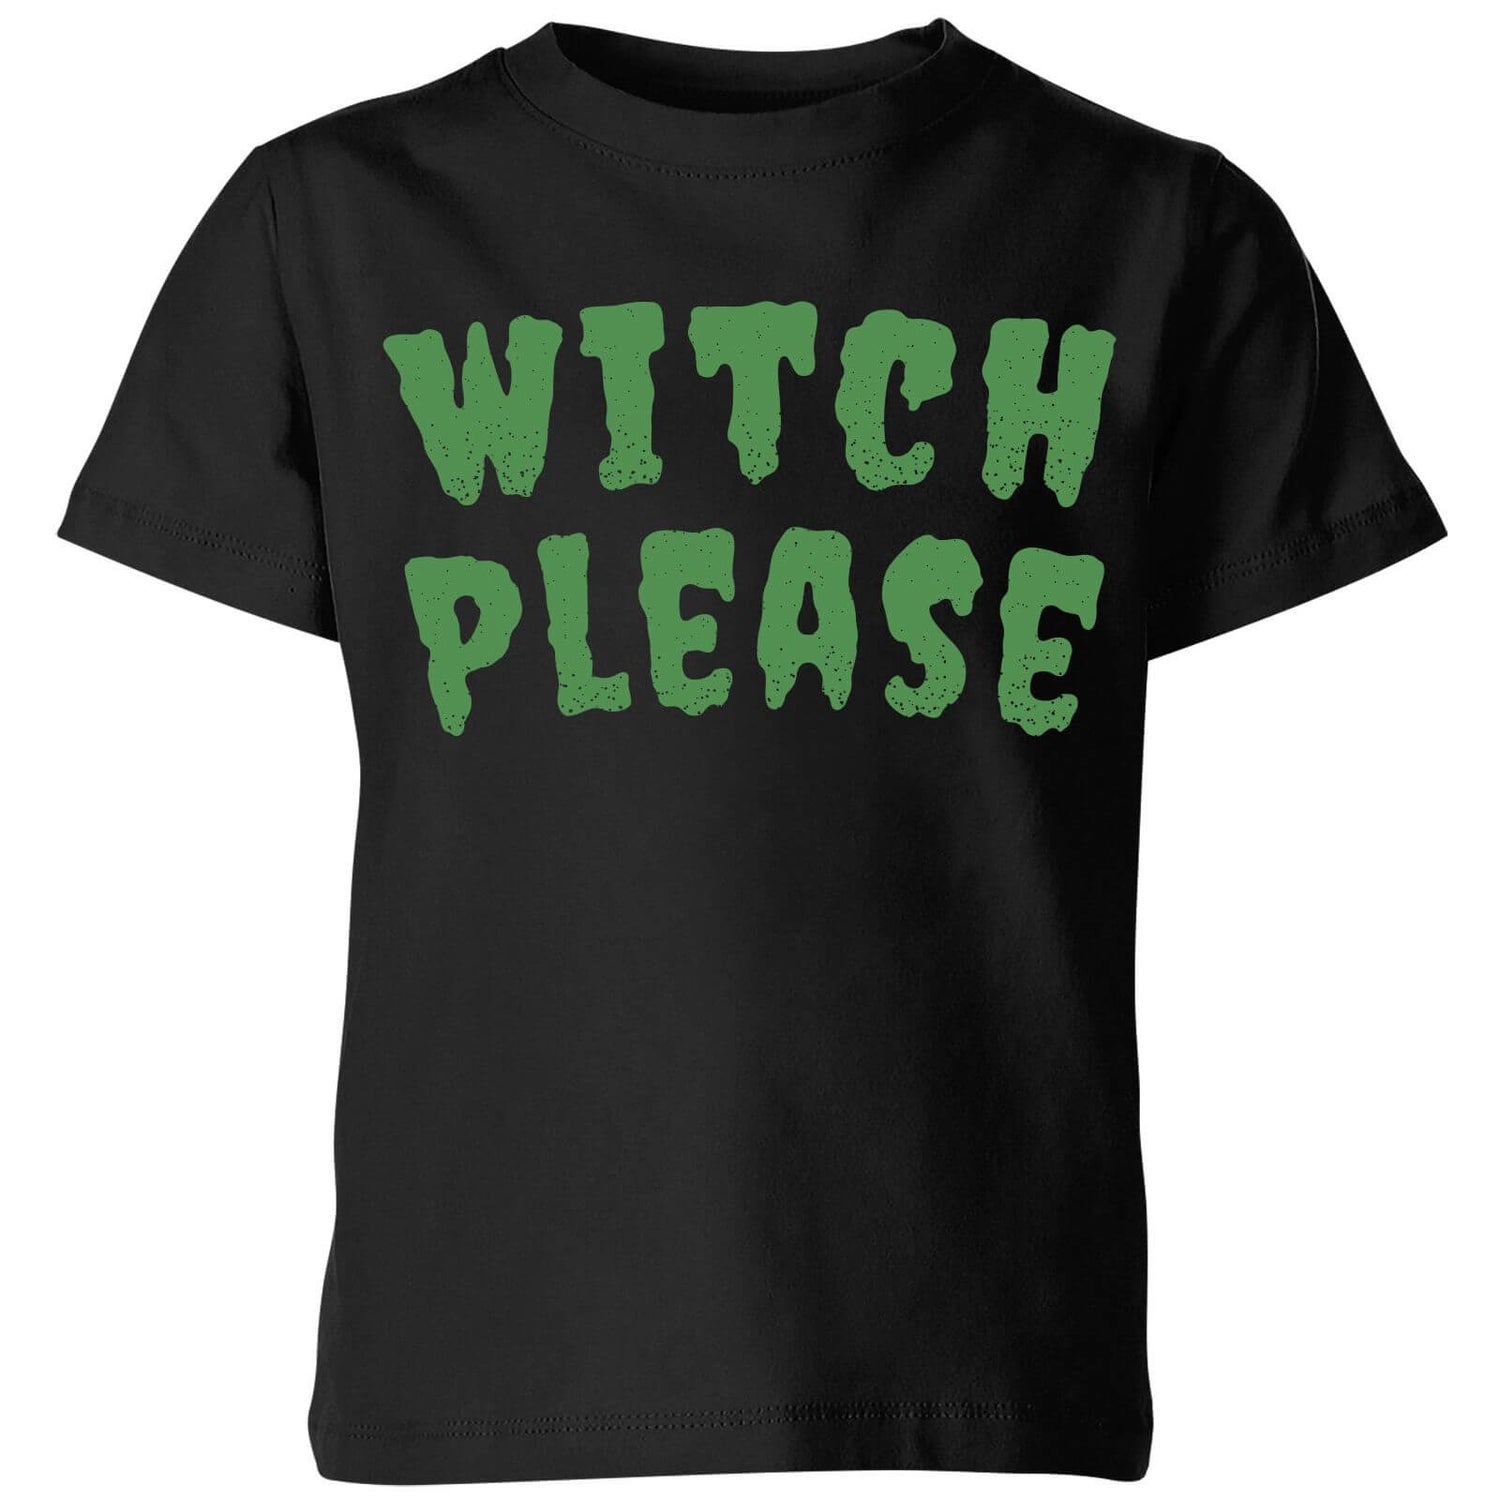 Witch Please Kids' T-Shirt - Black